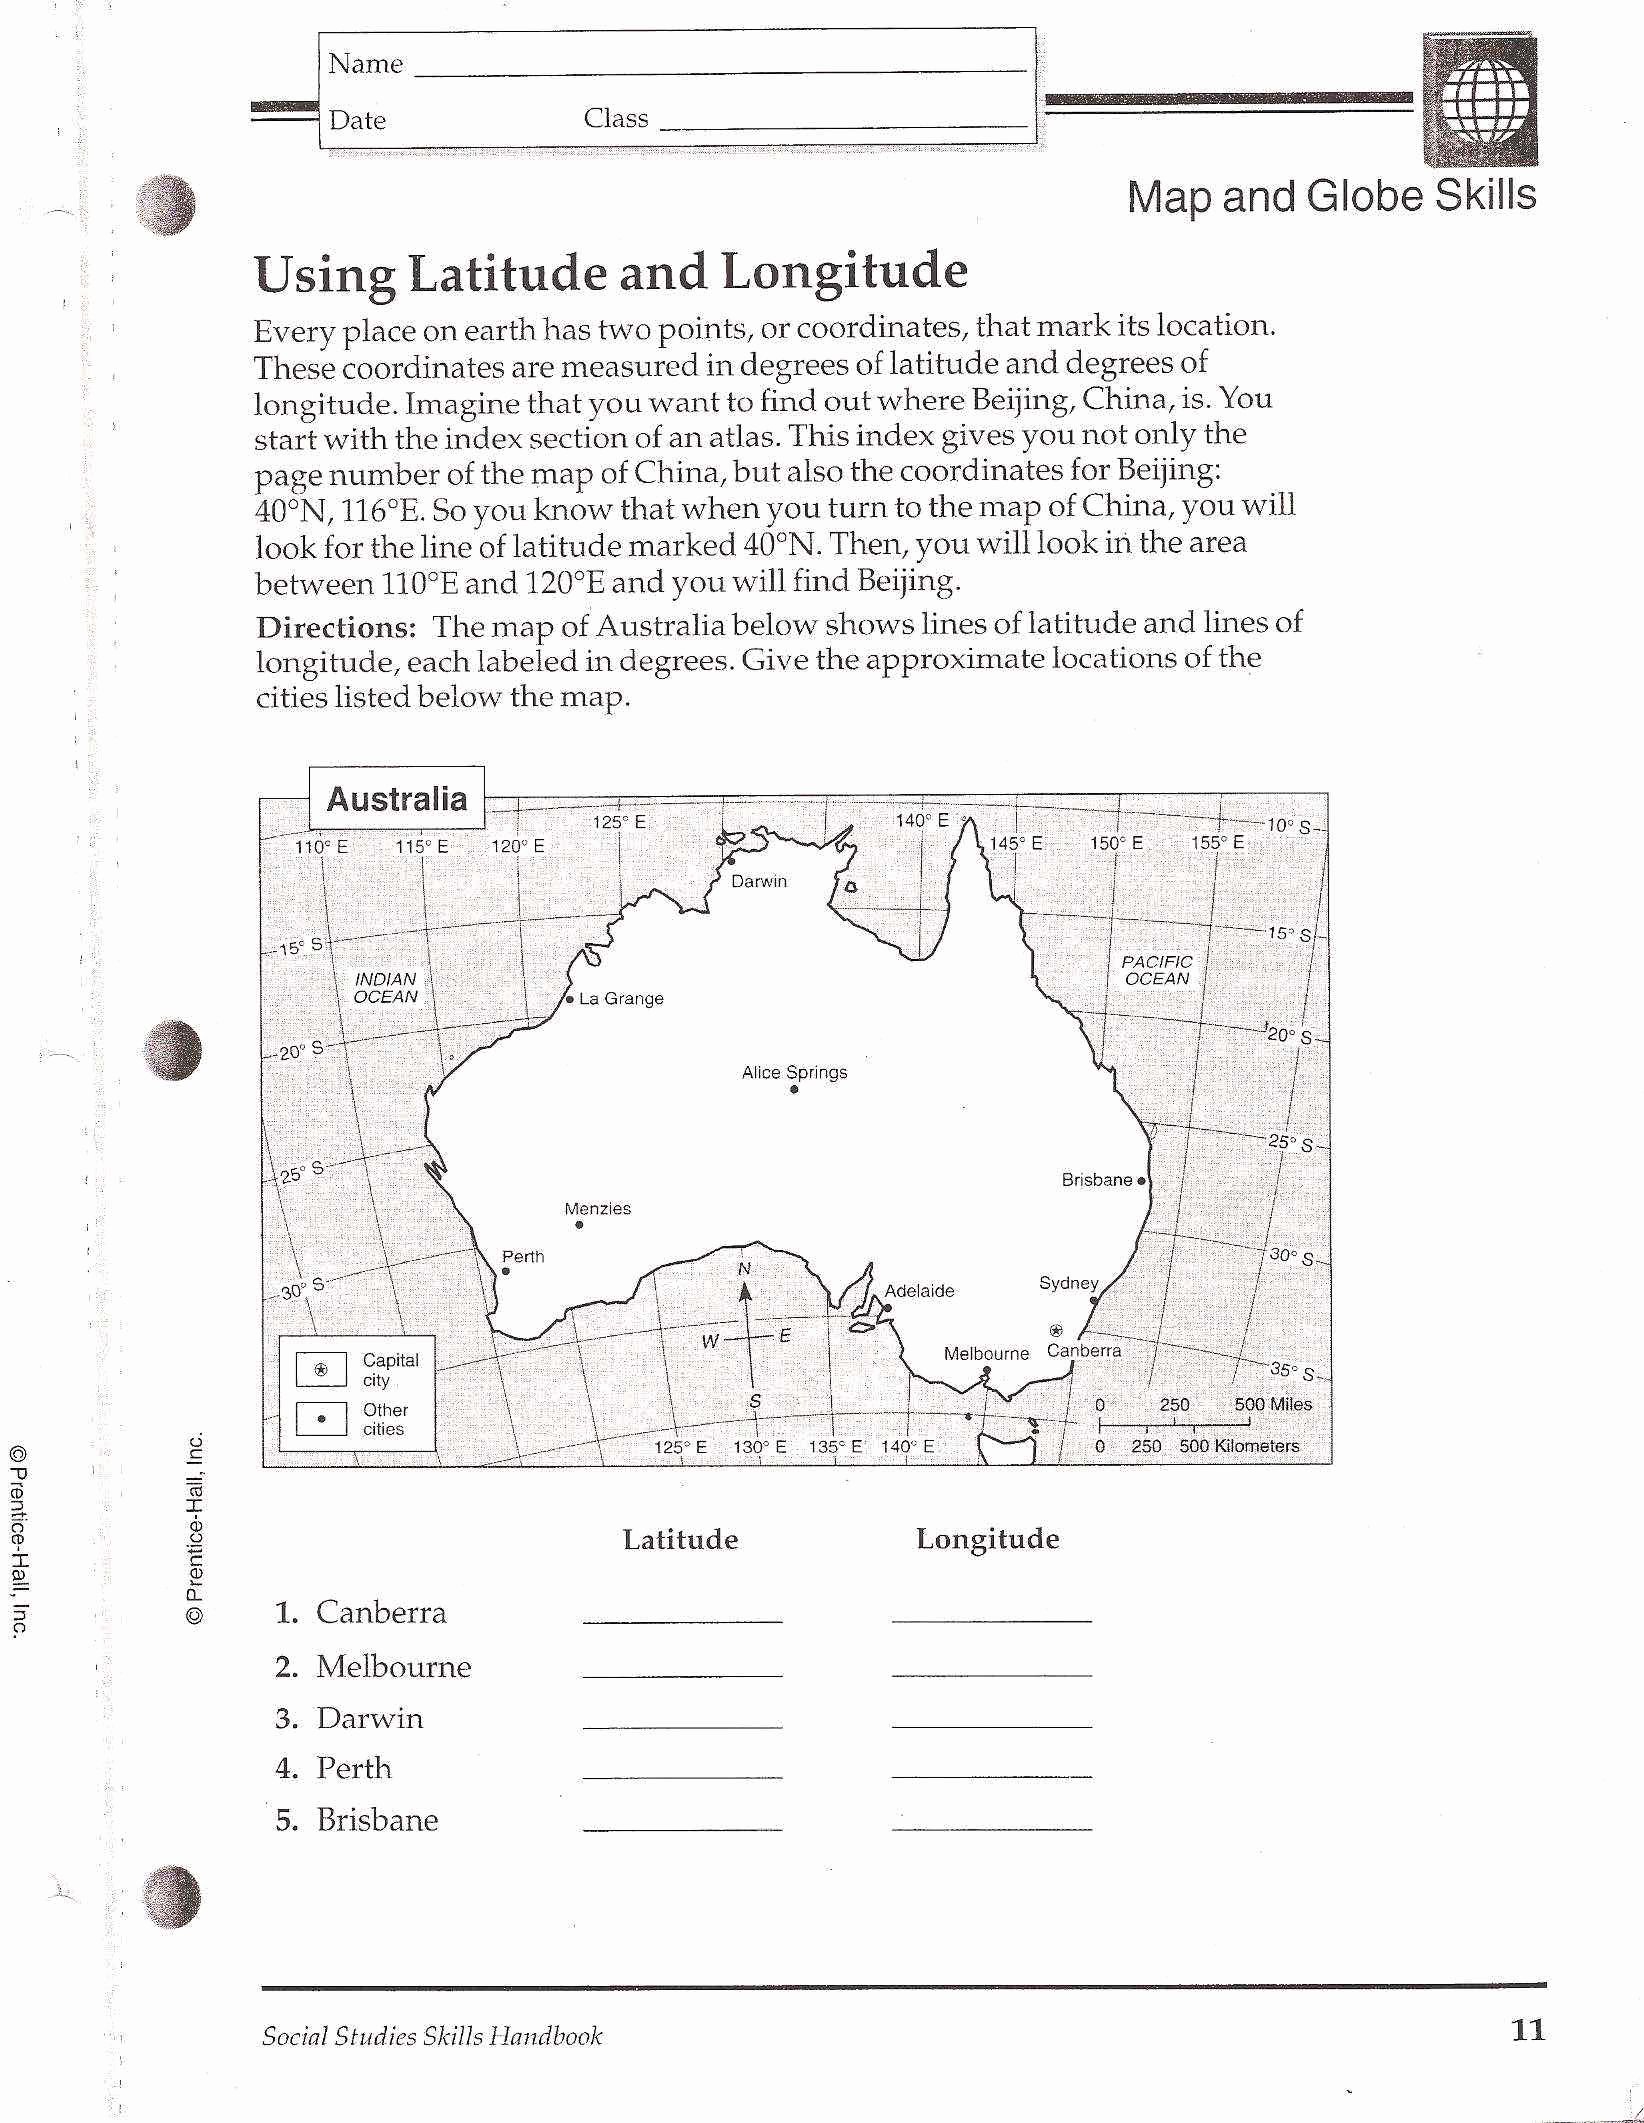 Longitude and Latitude Worksheet Fresh social Stu S Skills